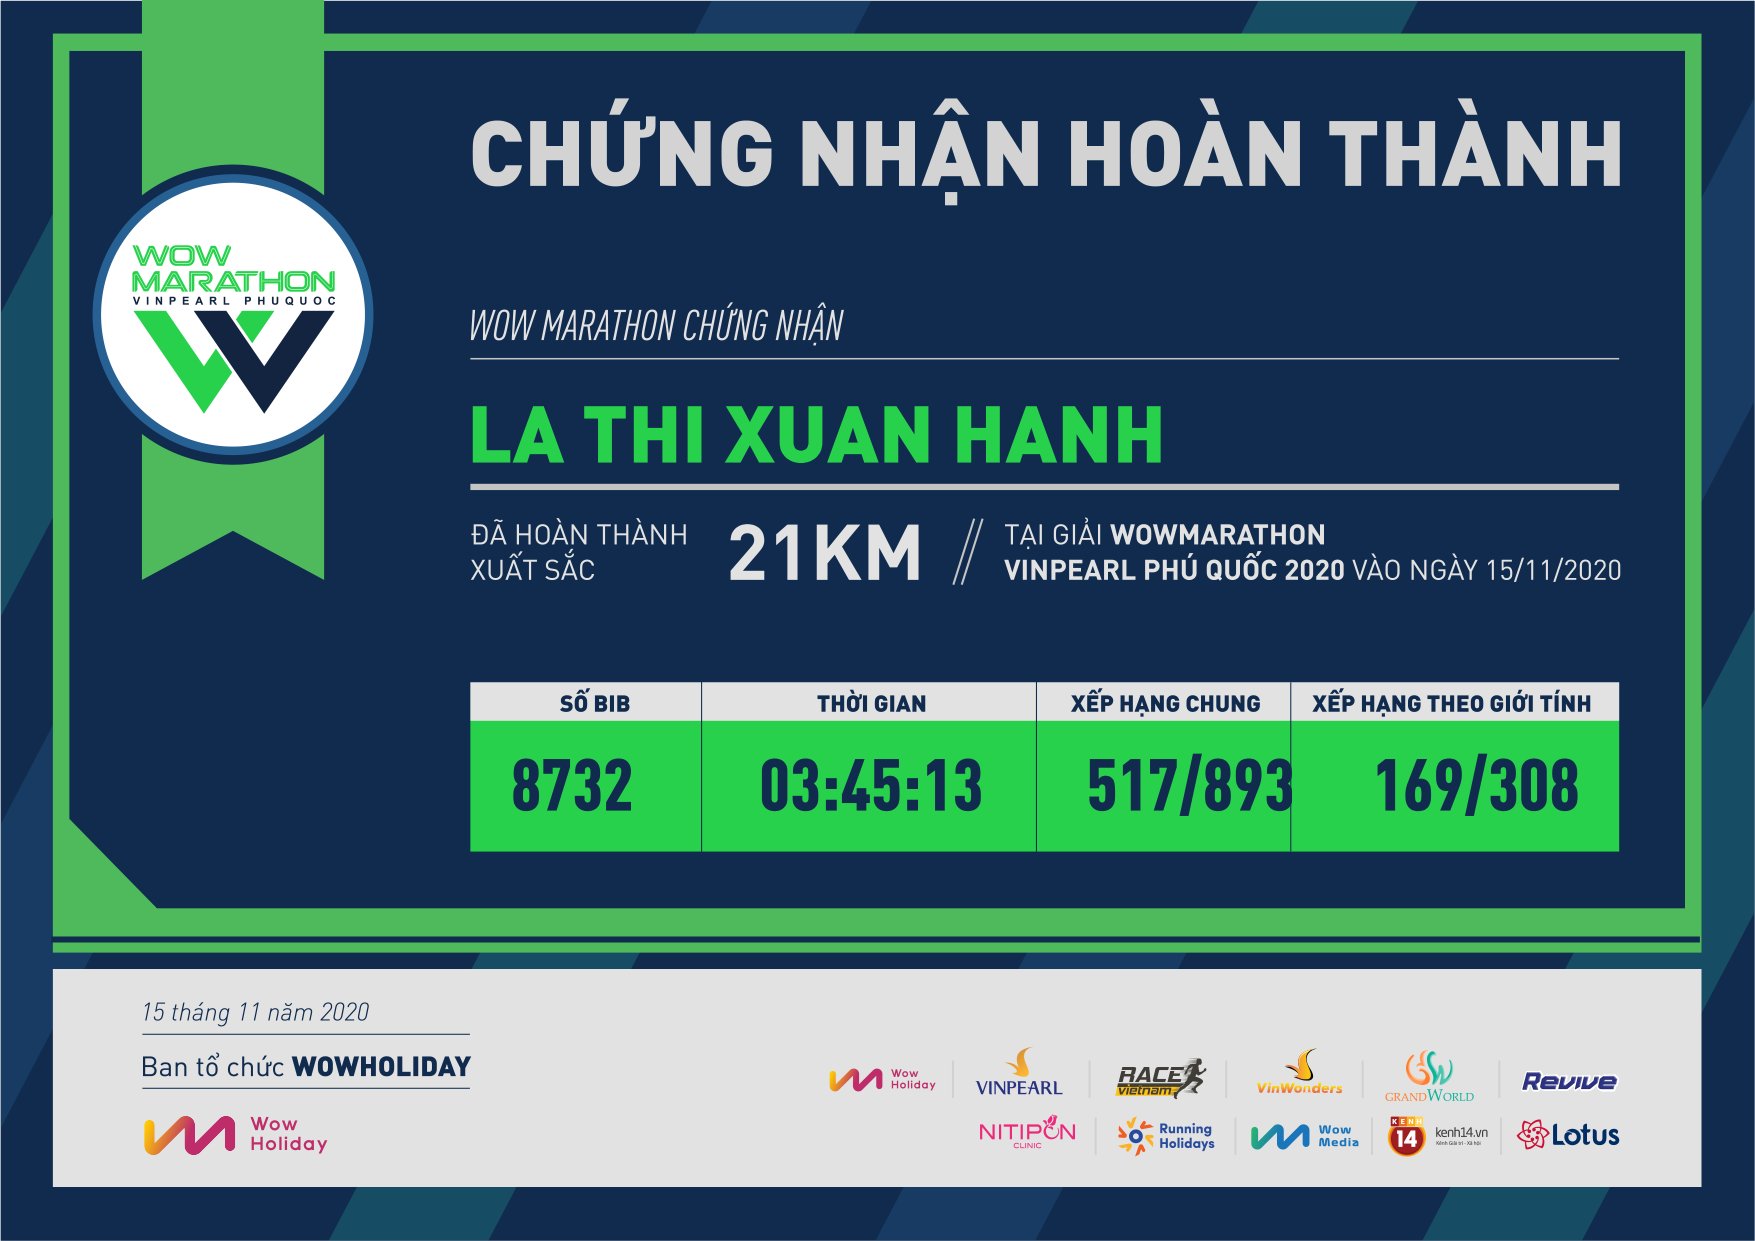 8732 - La Thi Xuan Hanh